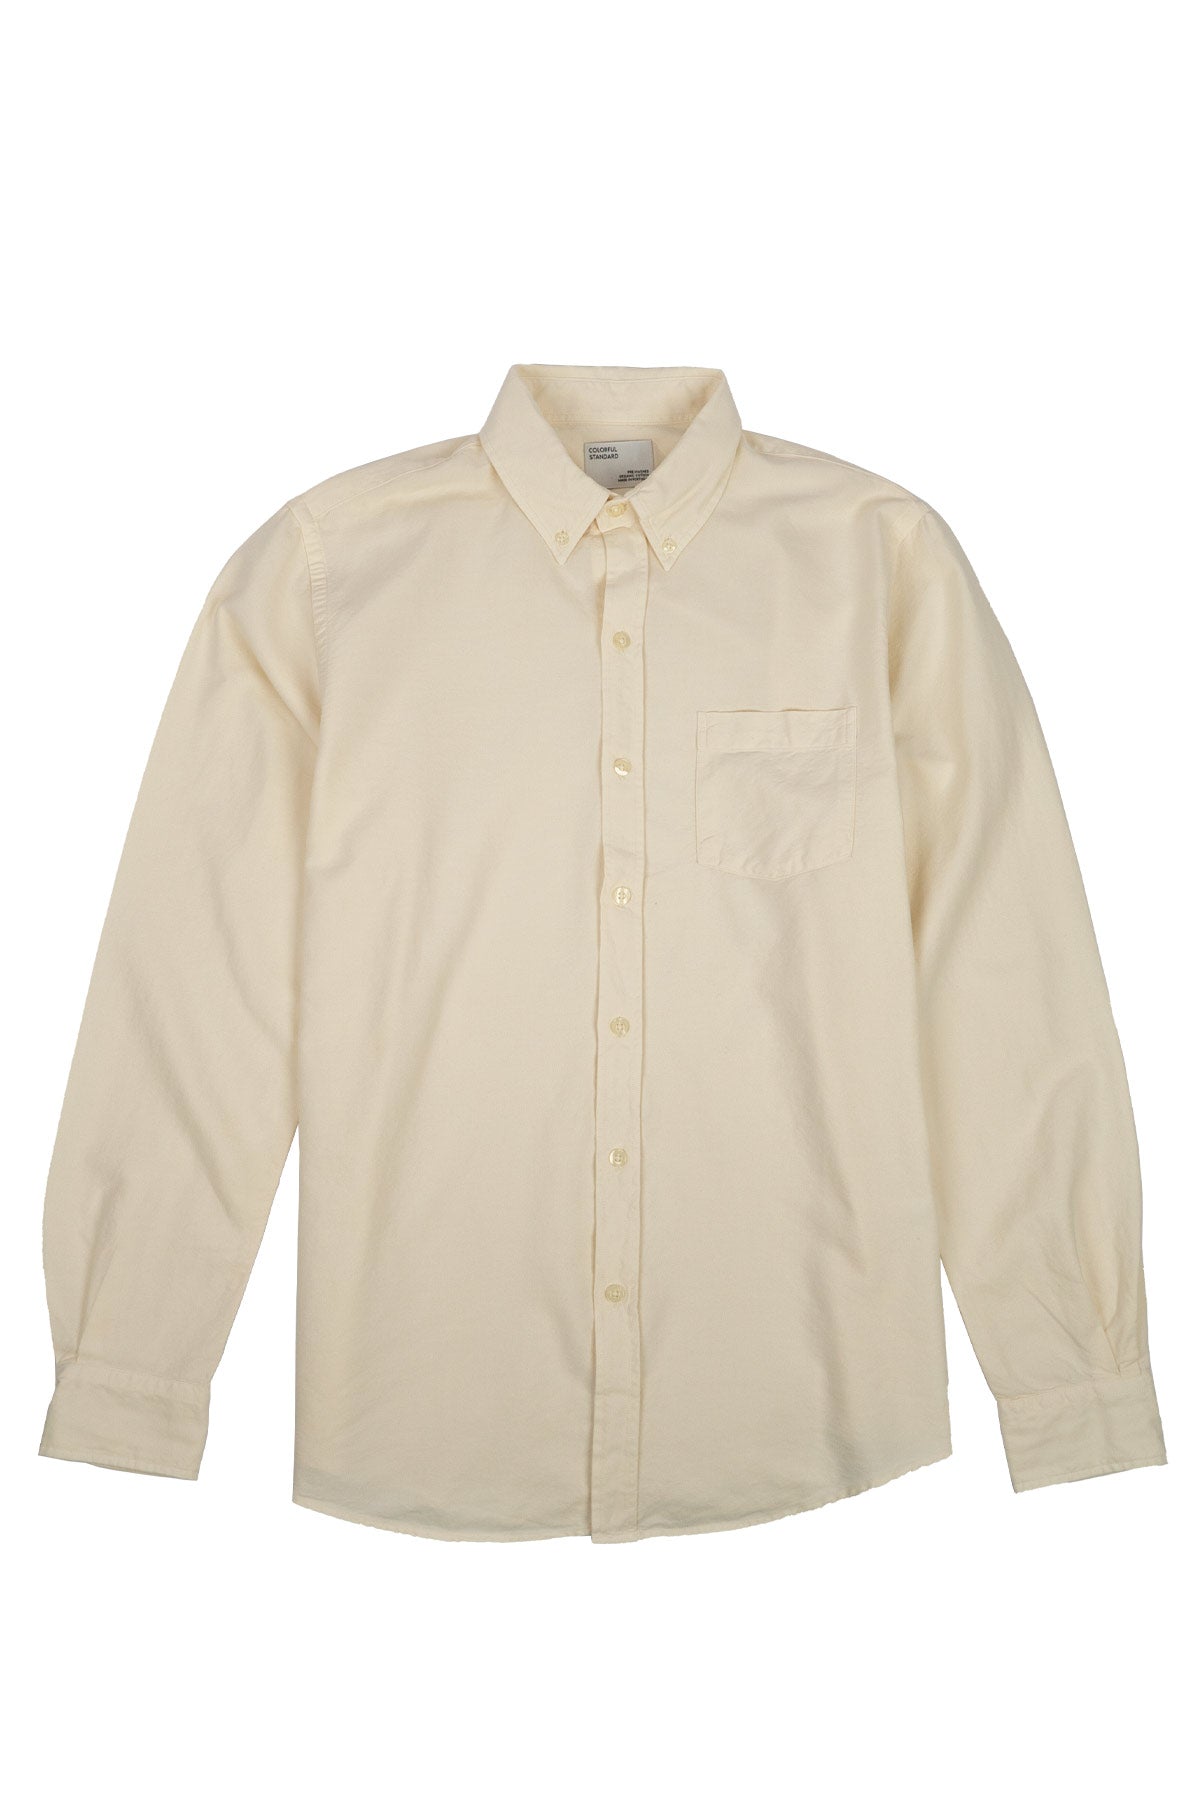 Organic Button Down Shirt - Colorful Standard